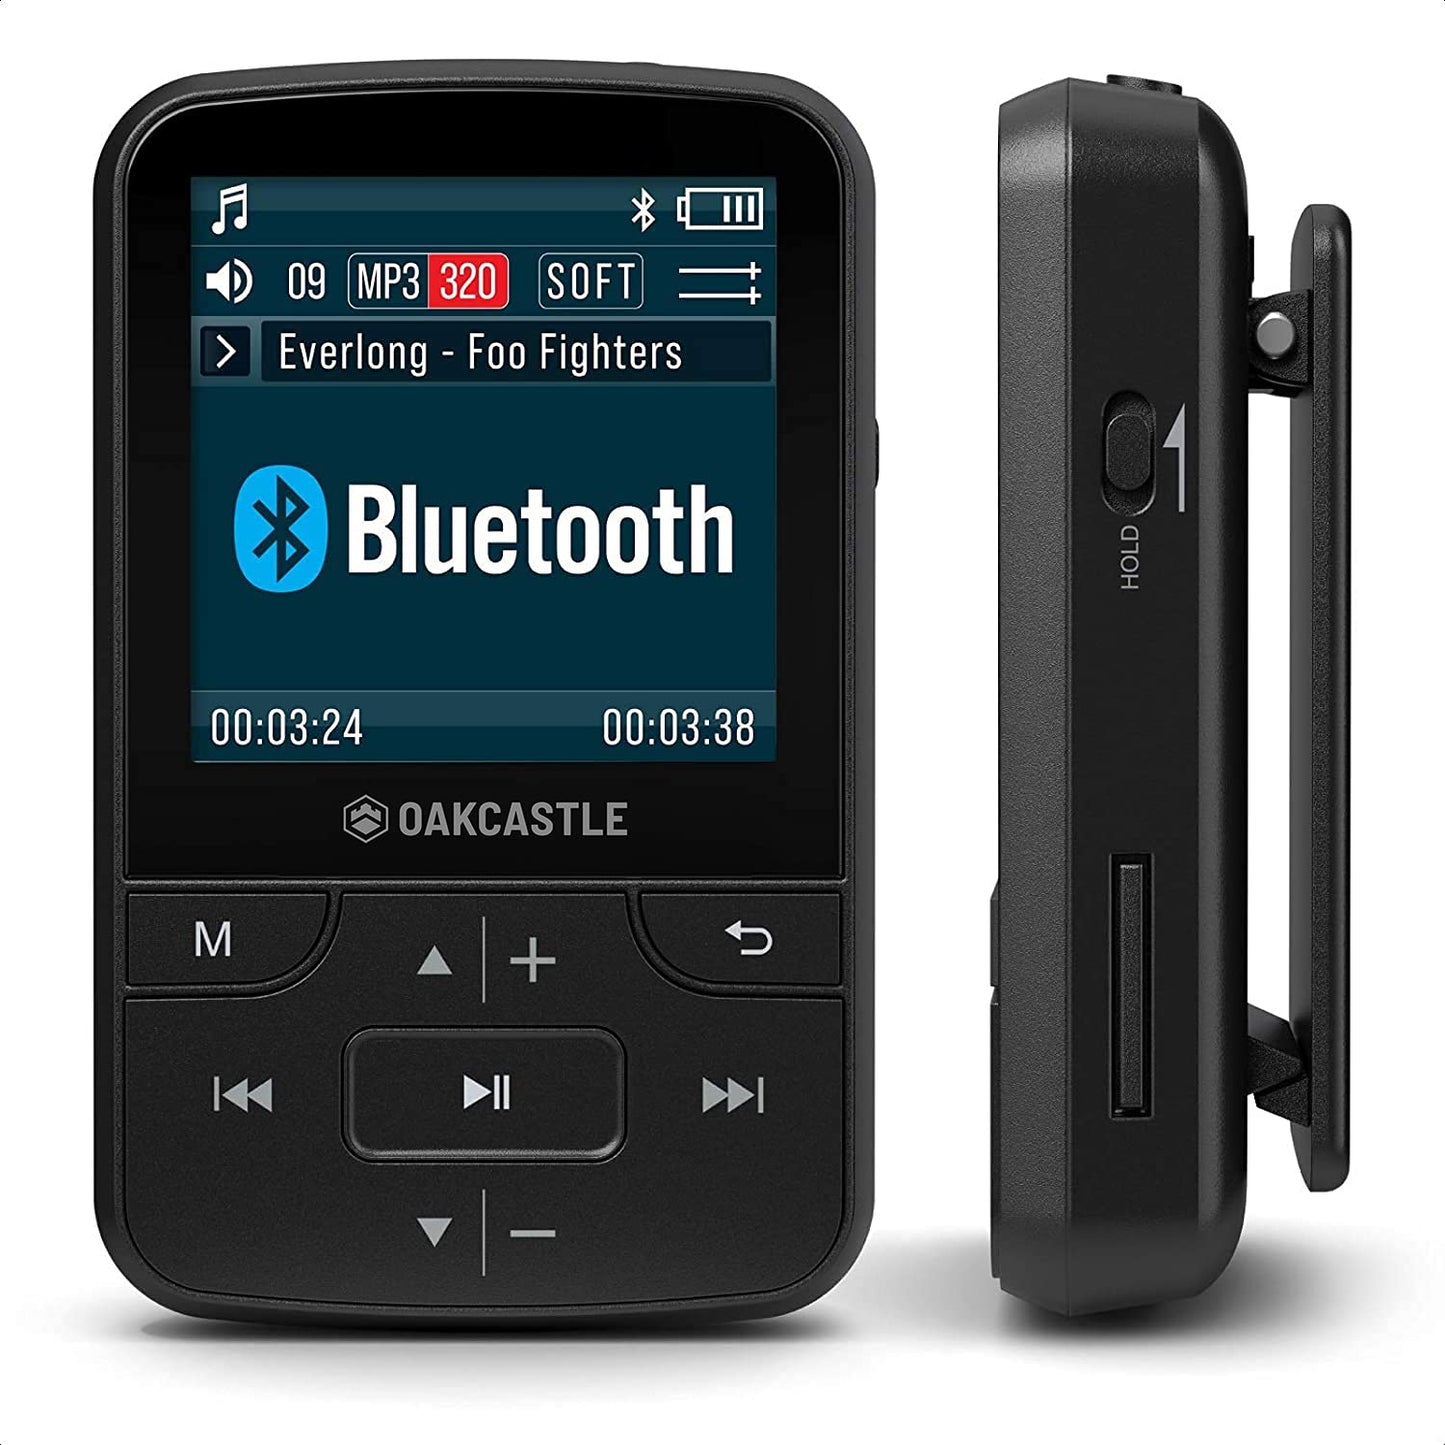 Oakcastle MP200 Bluetooth MP3 Player Portable Music Player FM Radio 8 GB